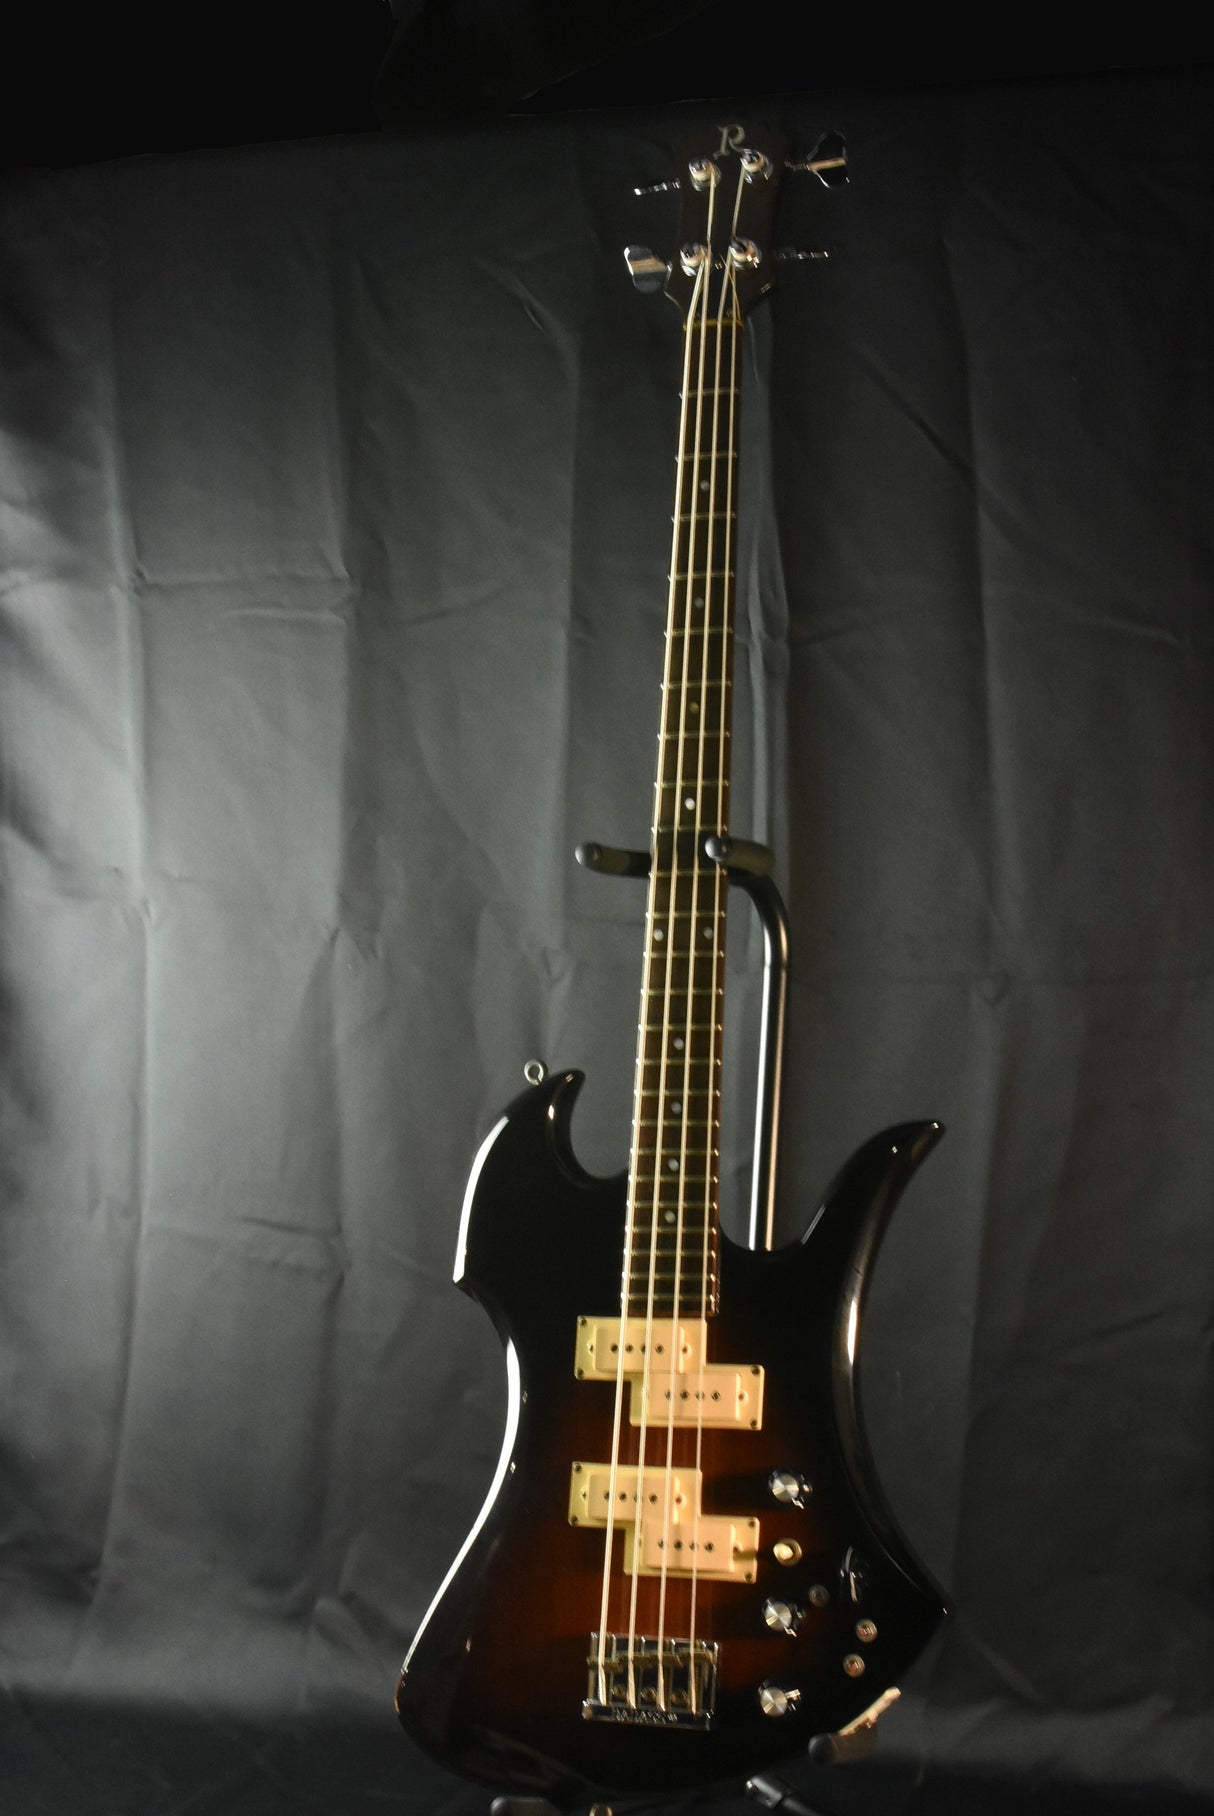 Used BC Rich 1977 Mockingbird Bass in Sunburst